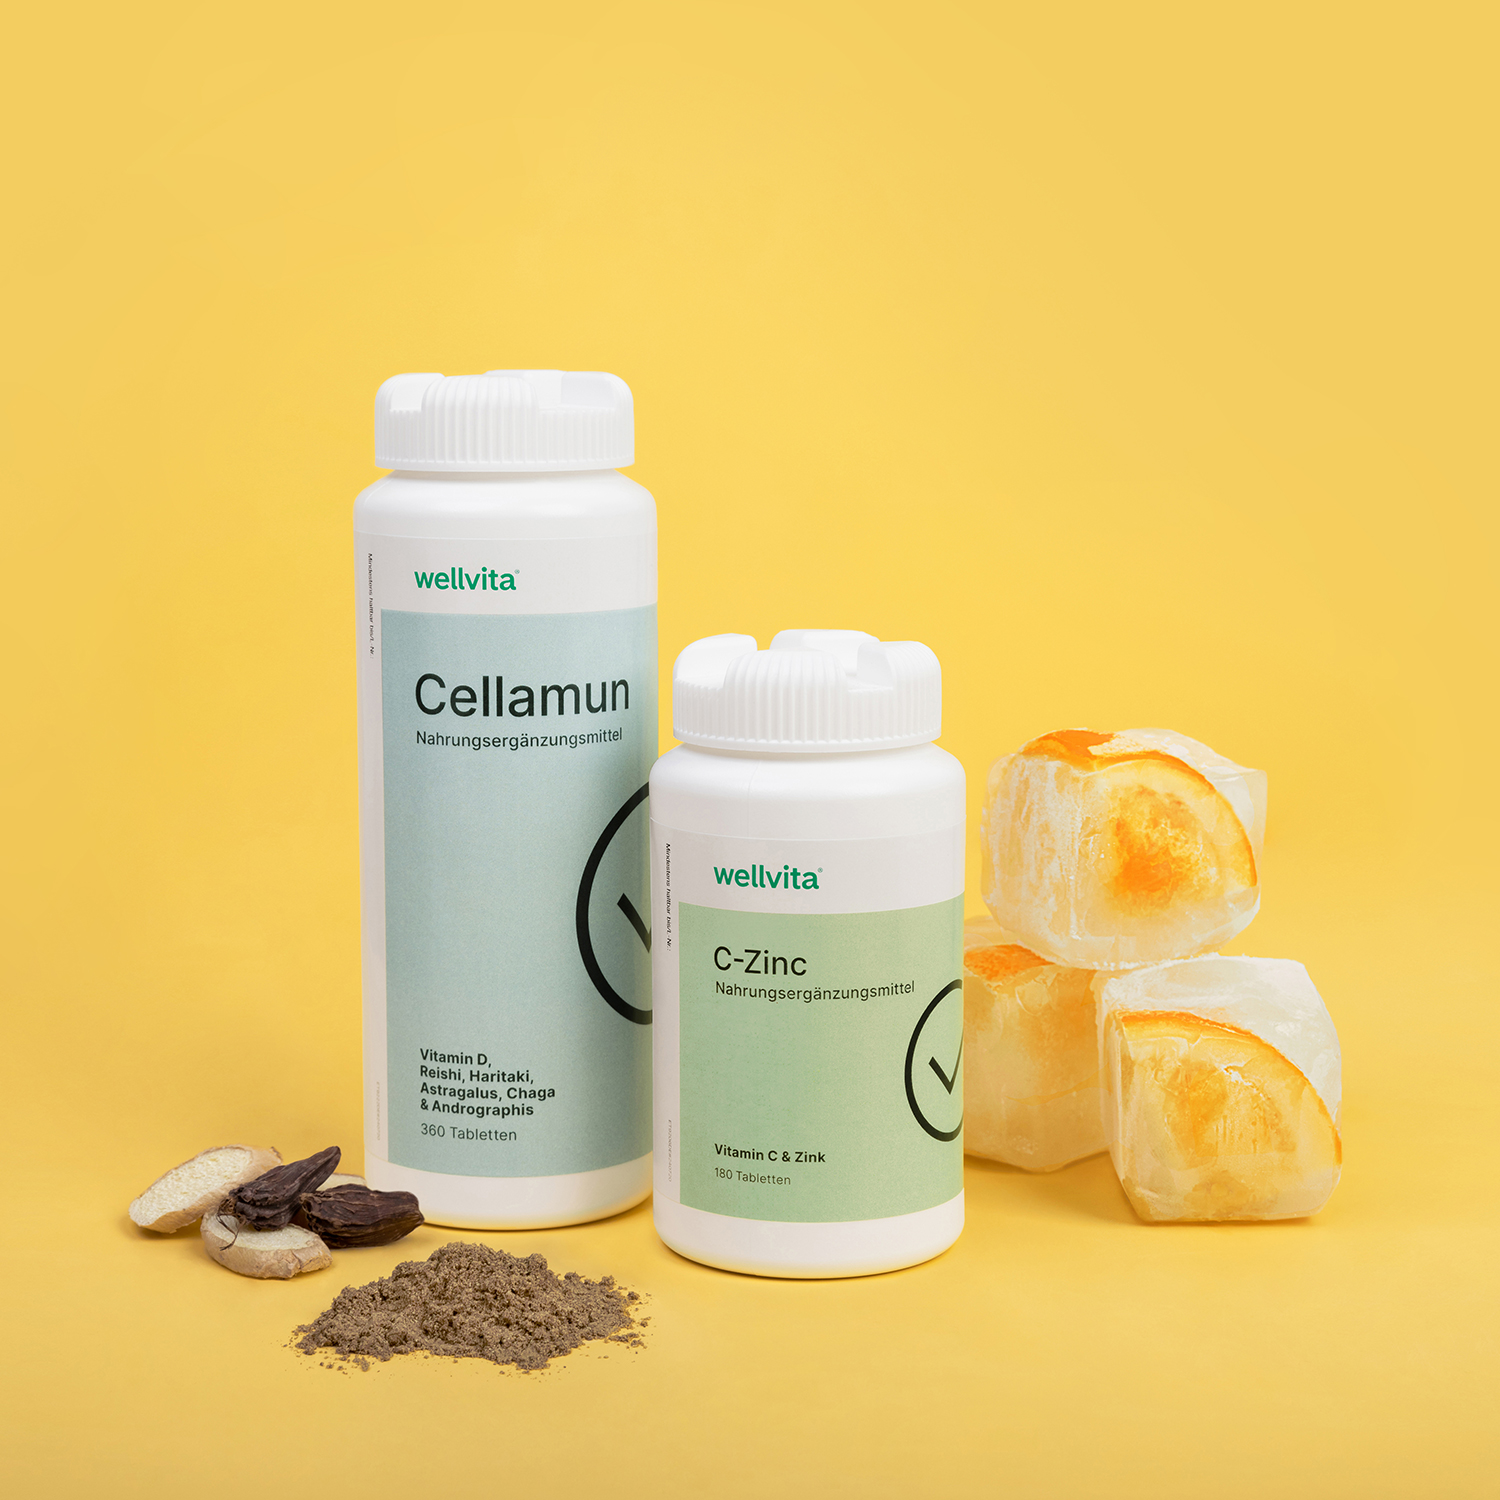 Wellvita Cellamun & c-zink vitamins. Photo: Tenna Fonnesbo